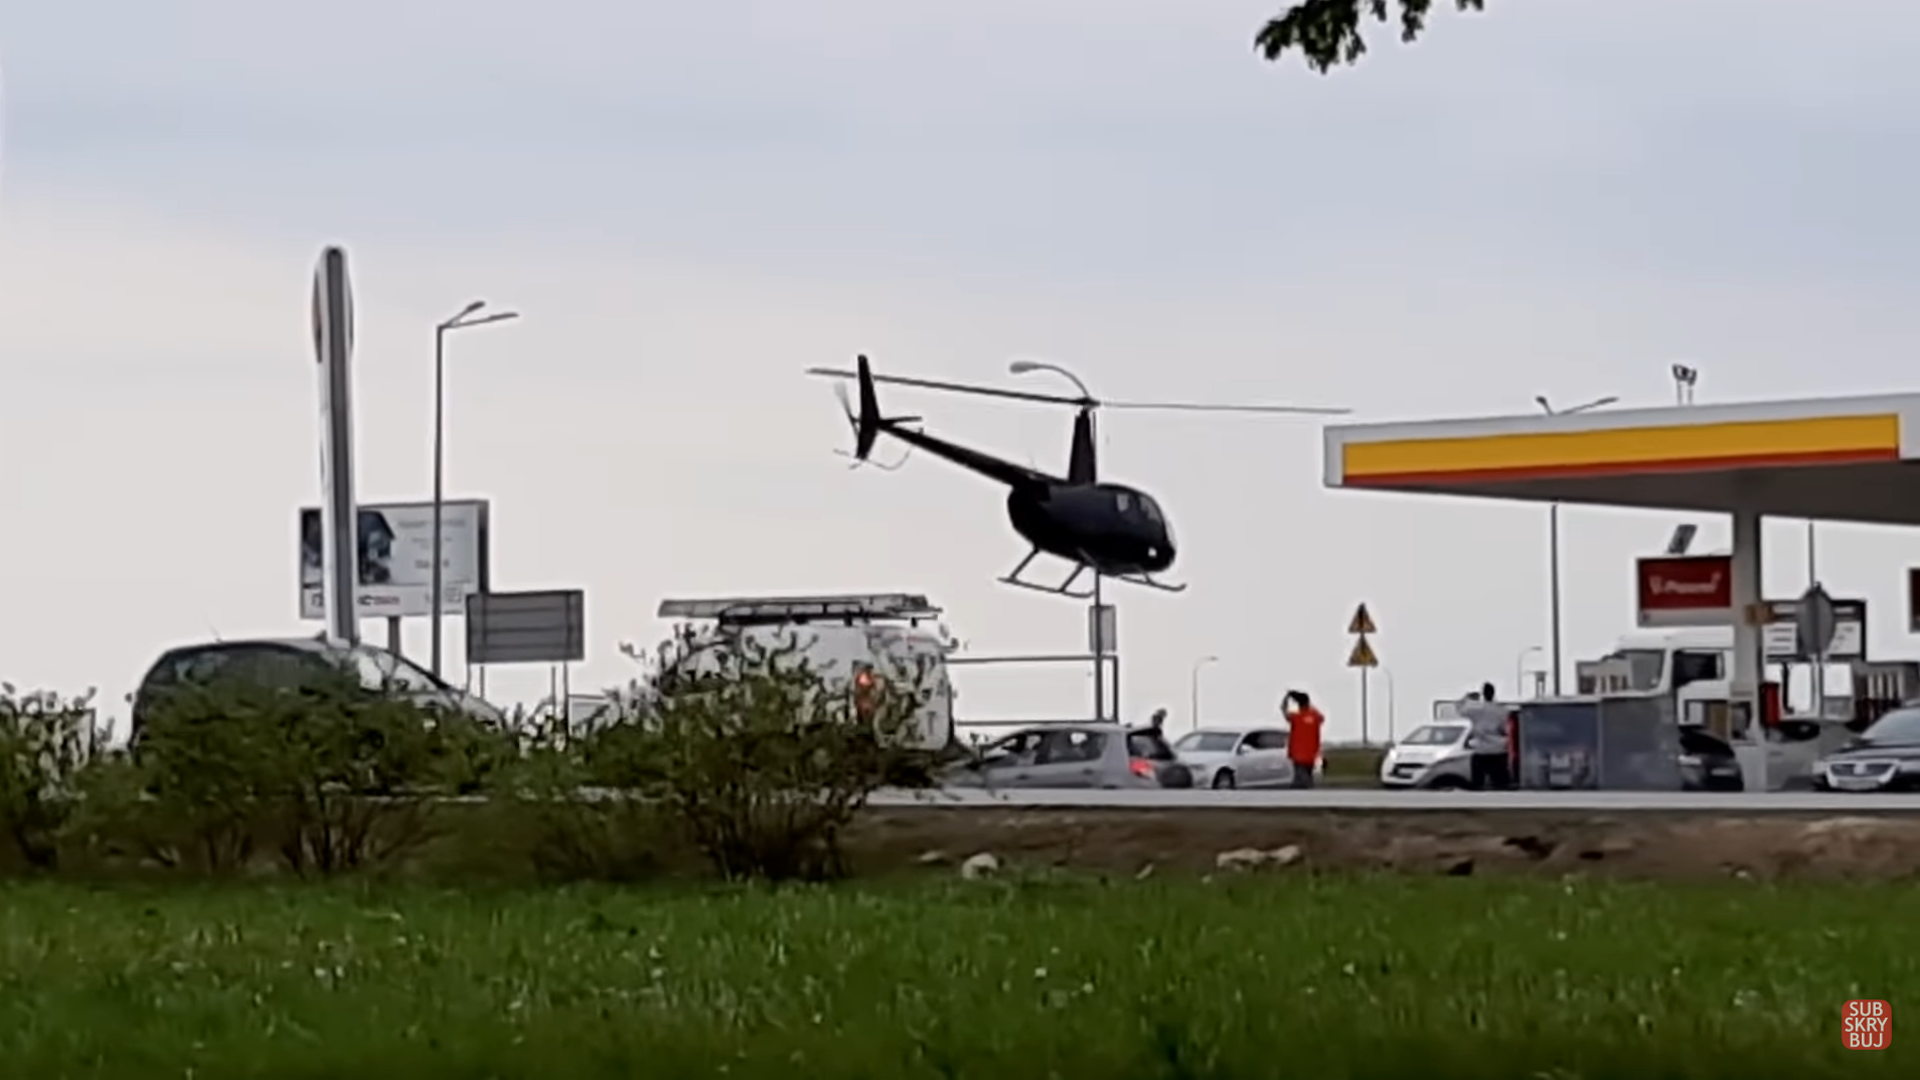 Pilot v Poľsku pristál s helikoptérou na čerpacej stanici. Natankoval si stroj a odletel